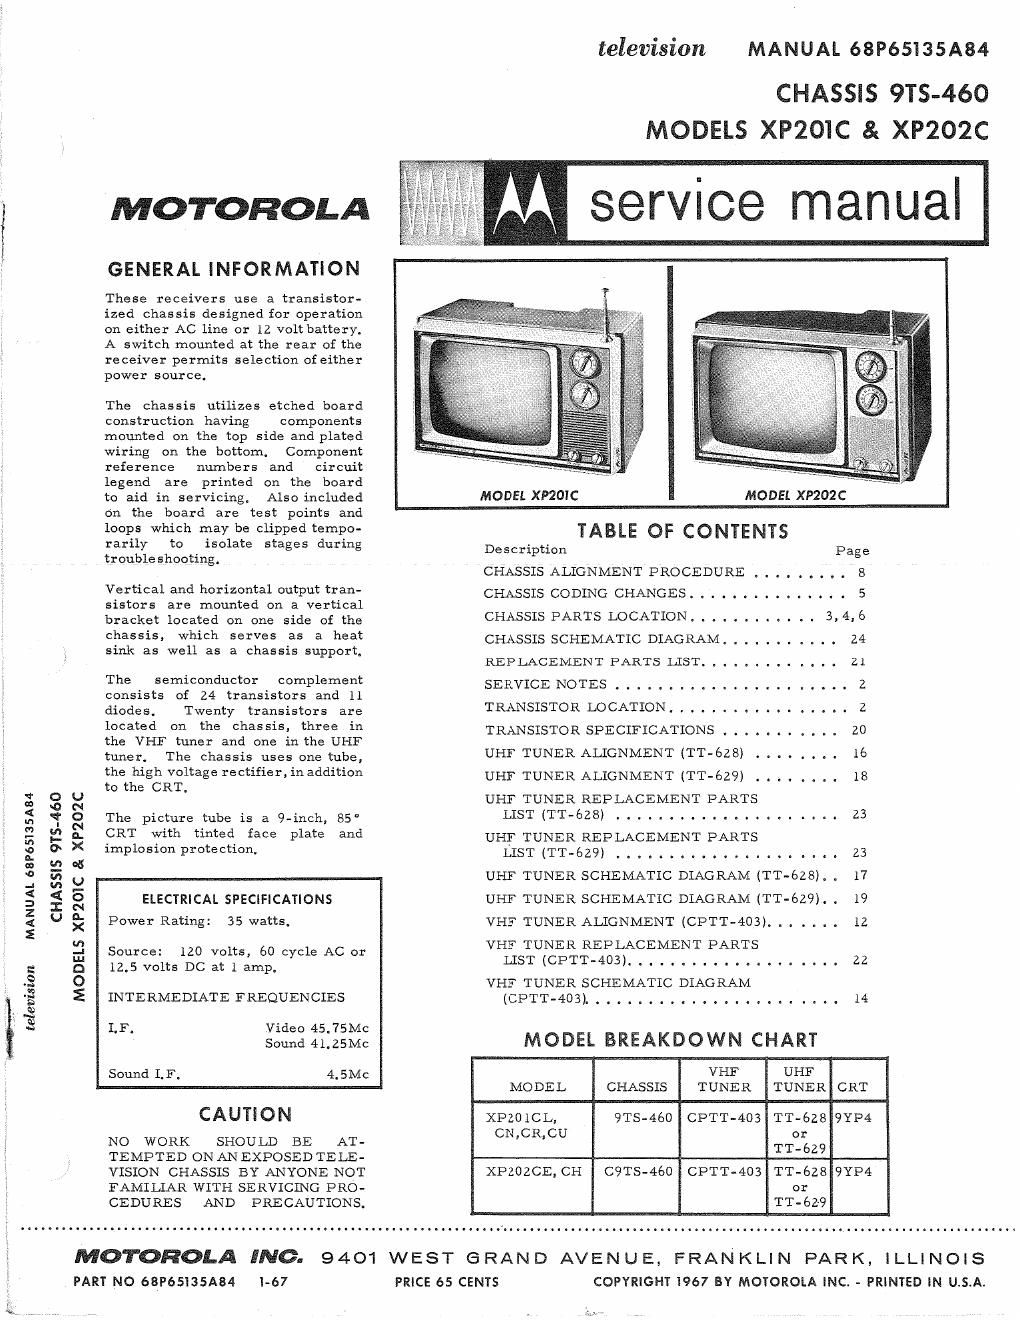 motorola xp 201 c service manual